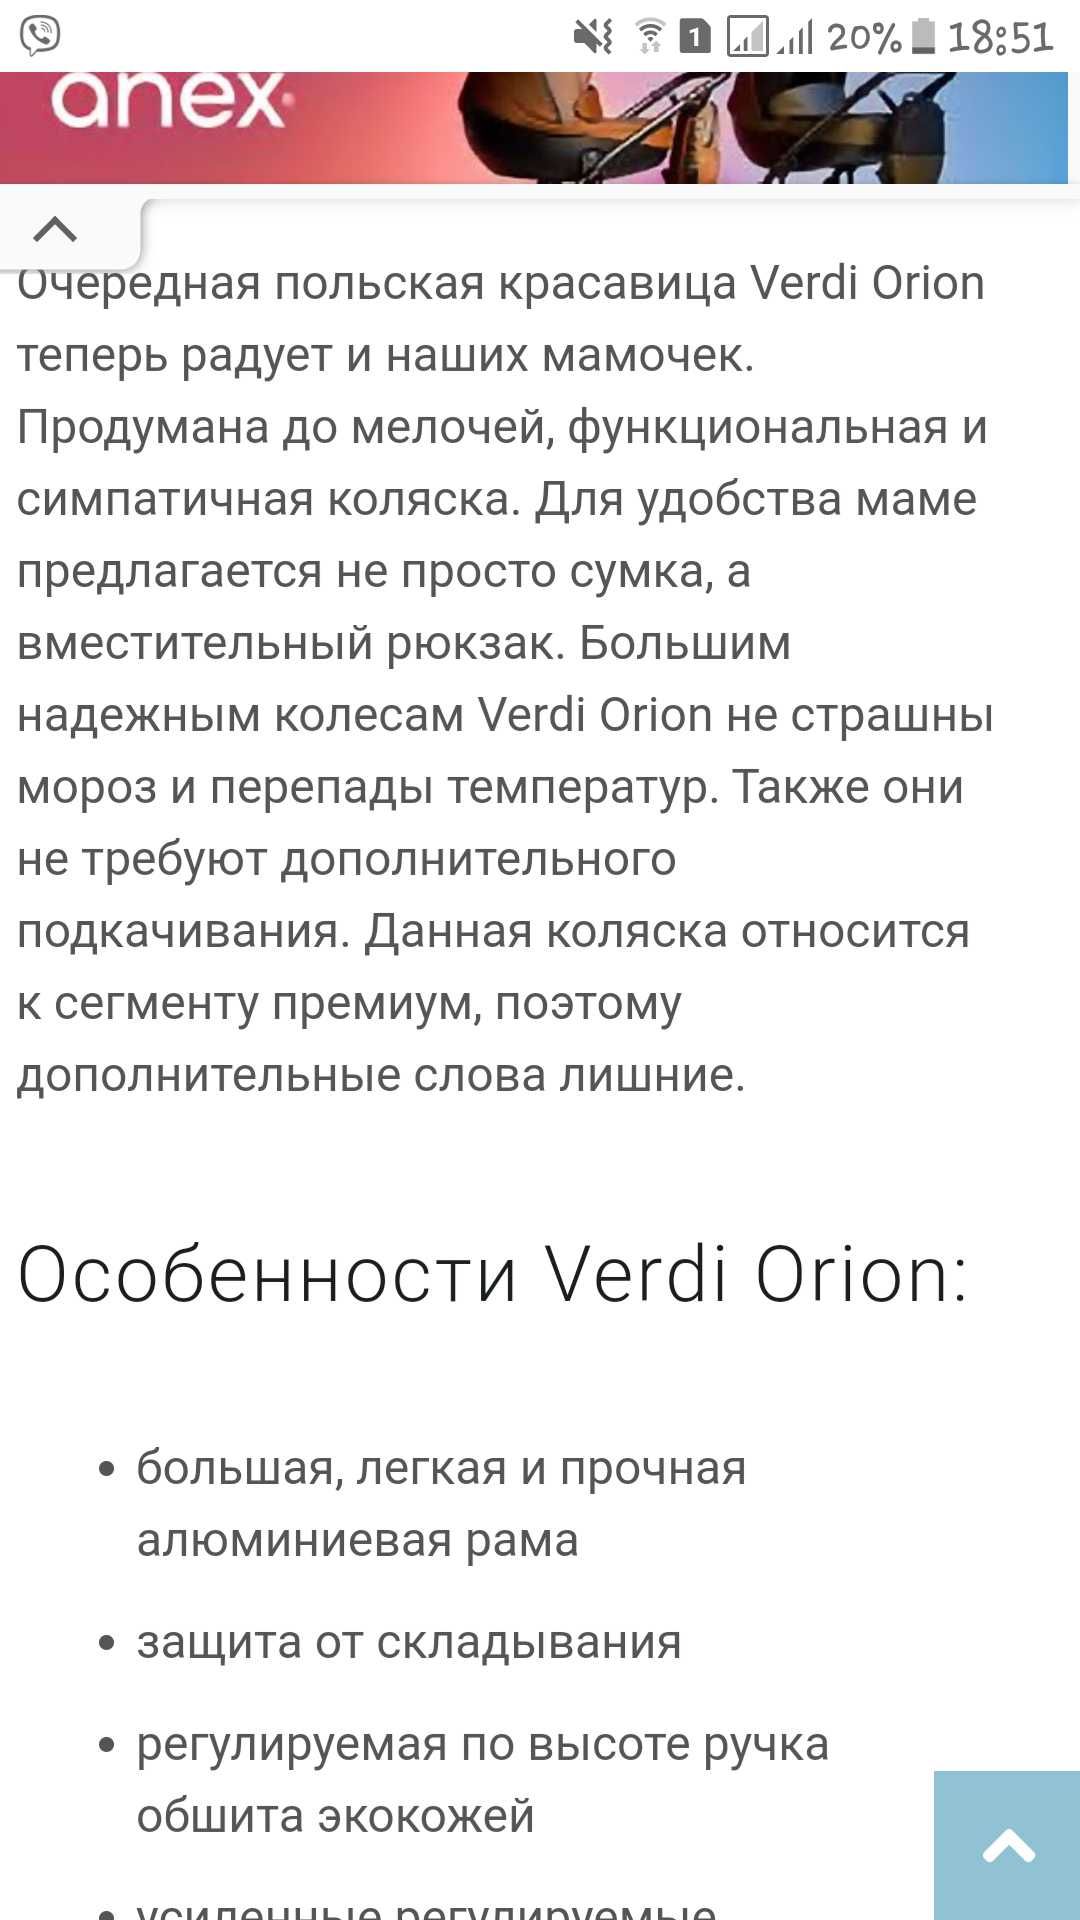 Коляска Verdi Orion желтая, цвет Yellow lemon 08